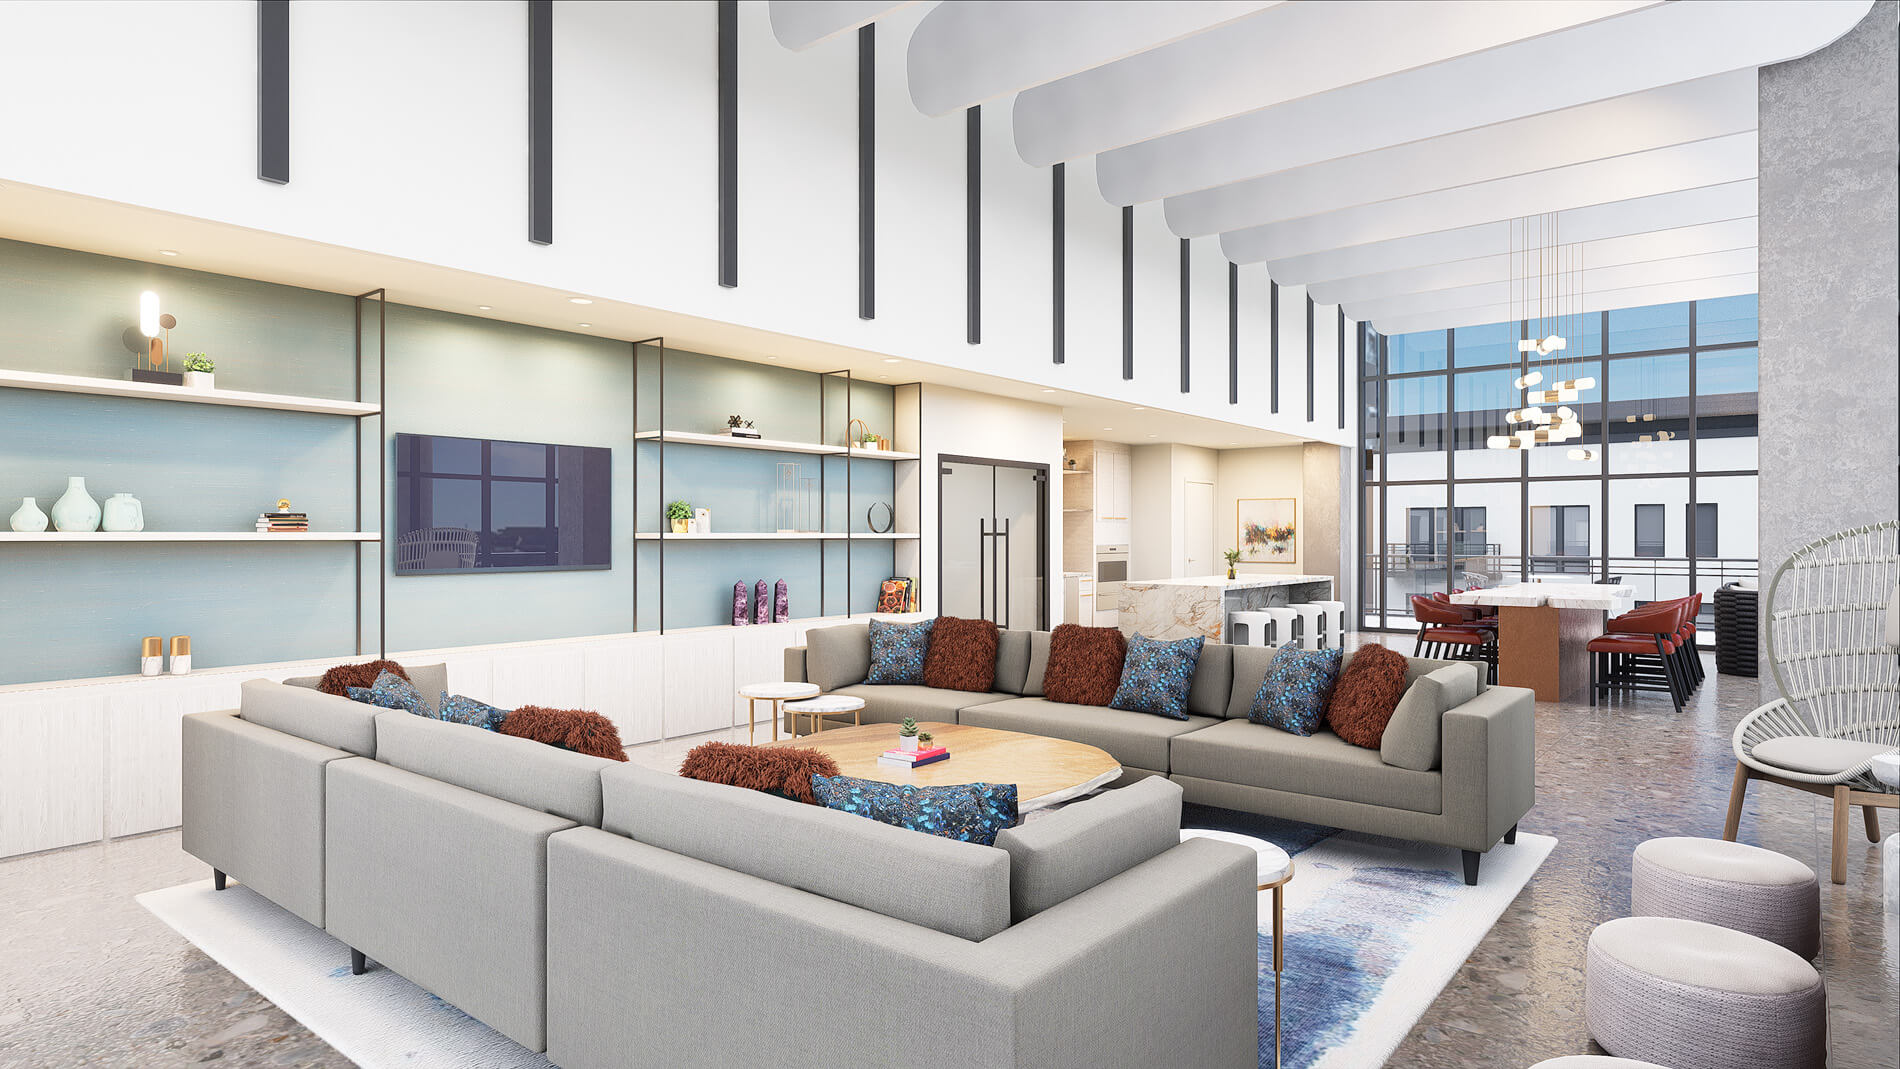 101 N Meridian penthouse lounge